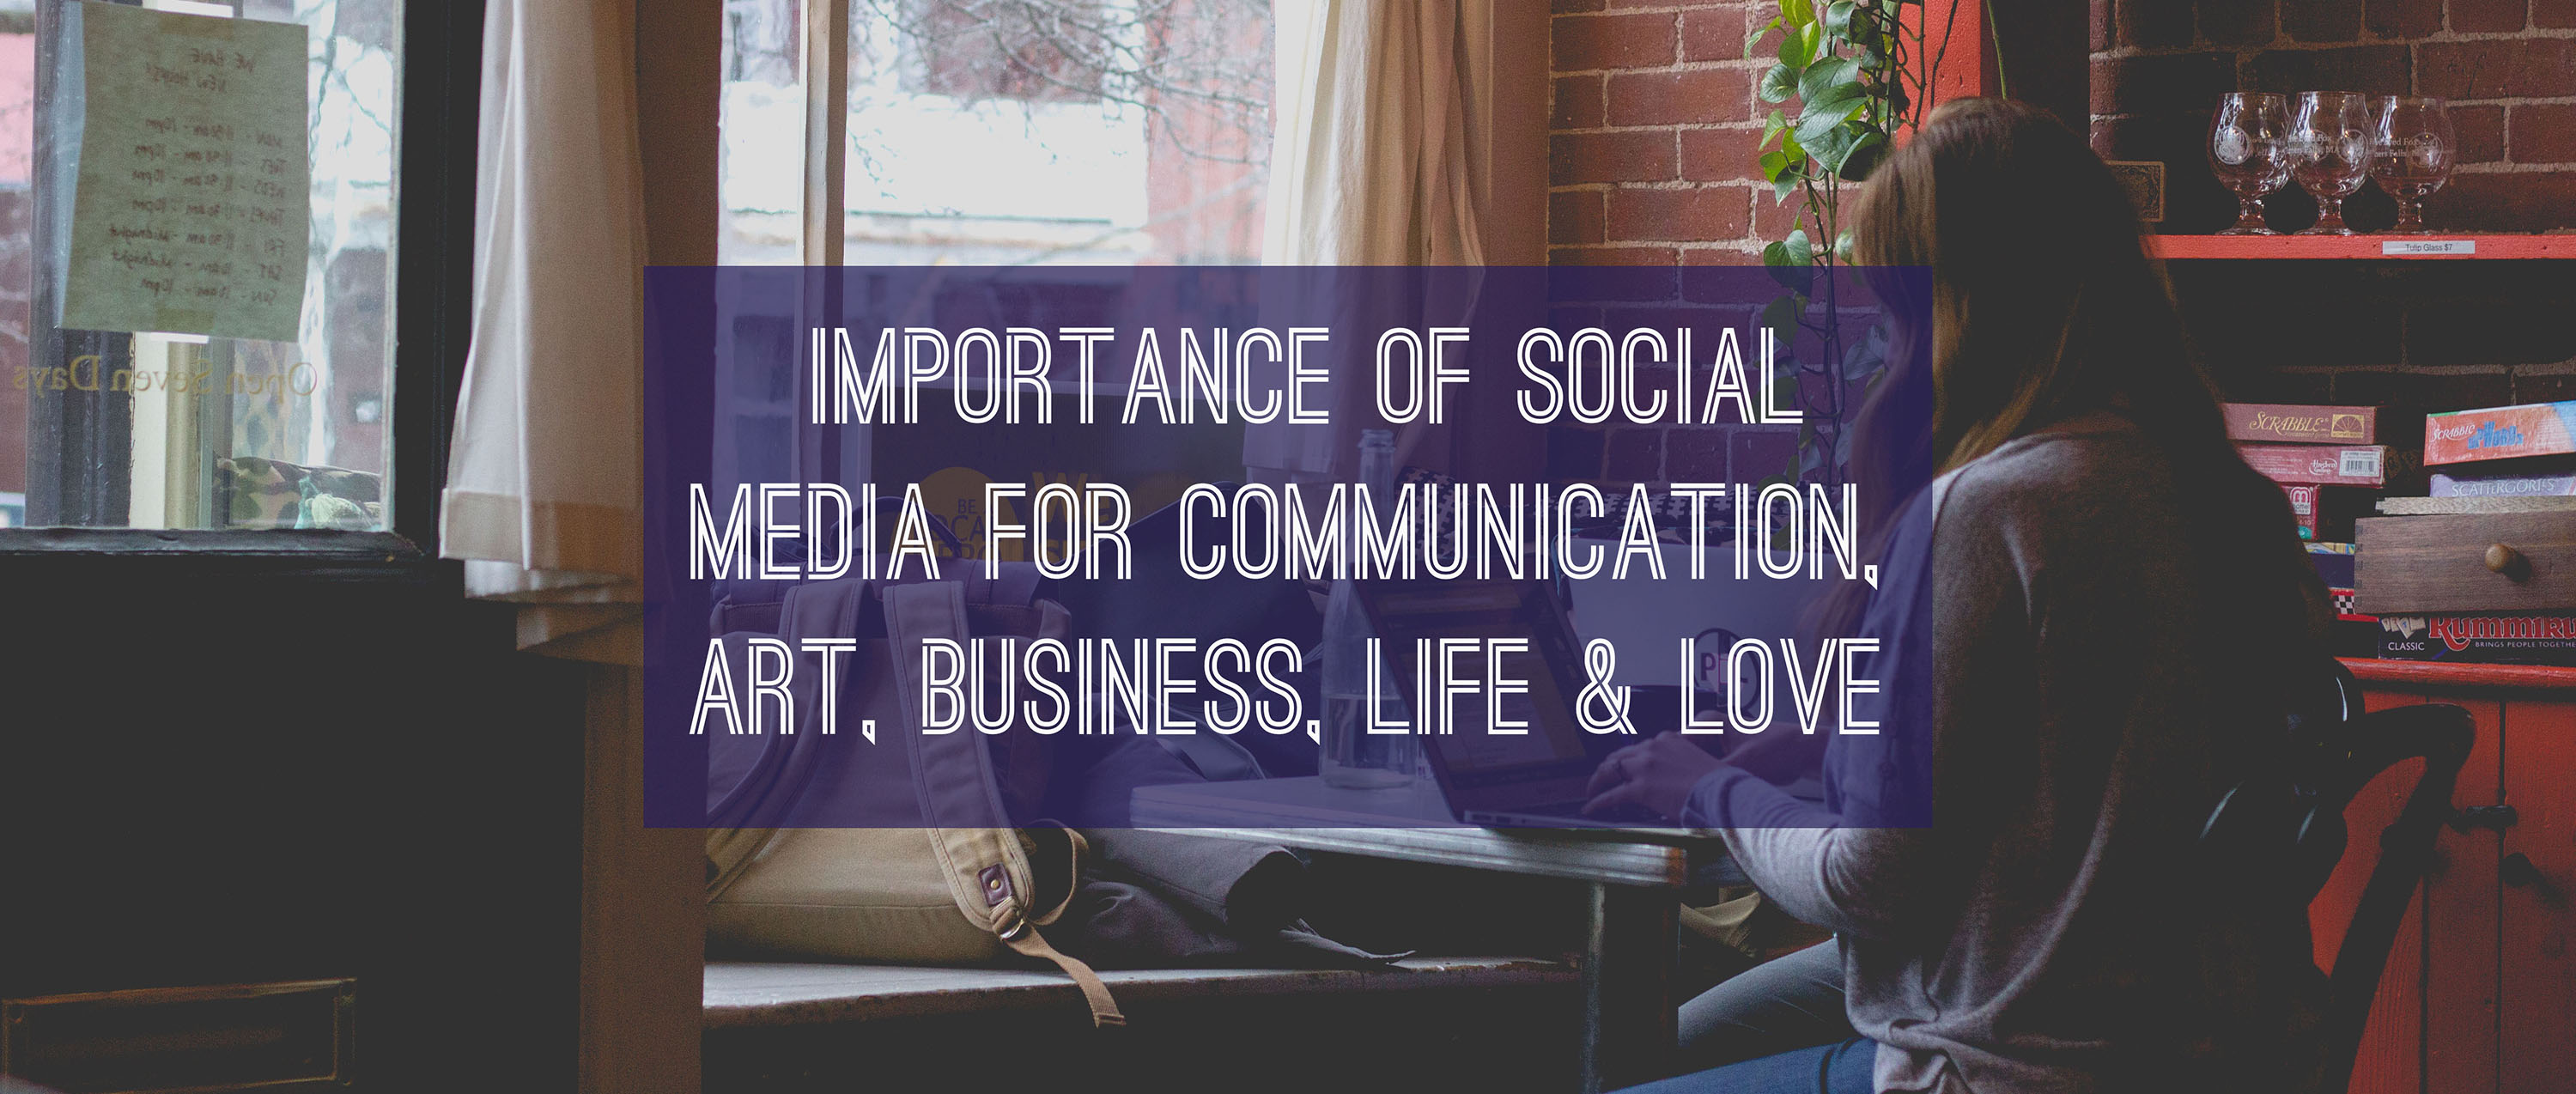 Importance of Social Media for communication, art, business, life & love